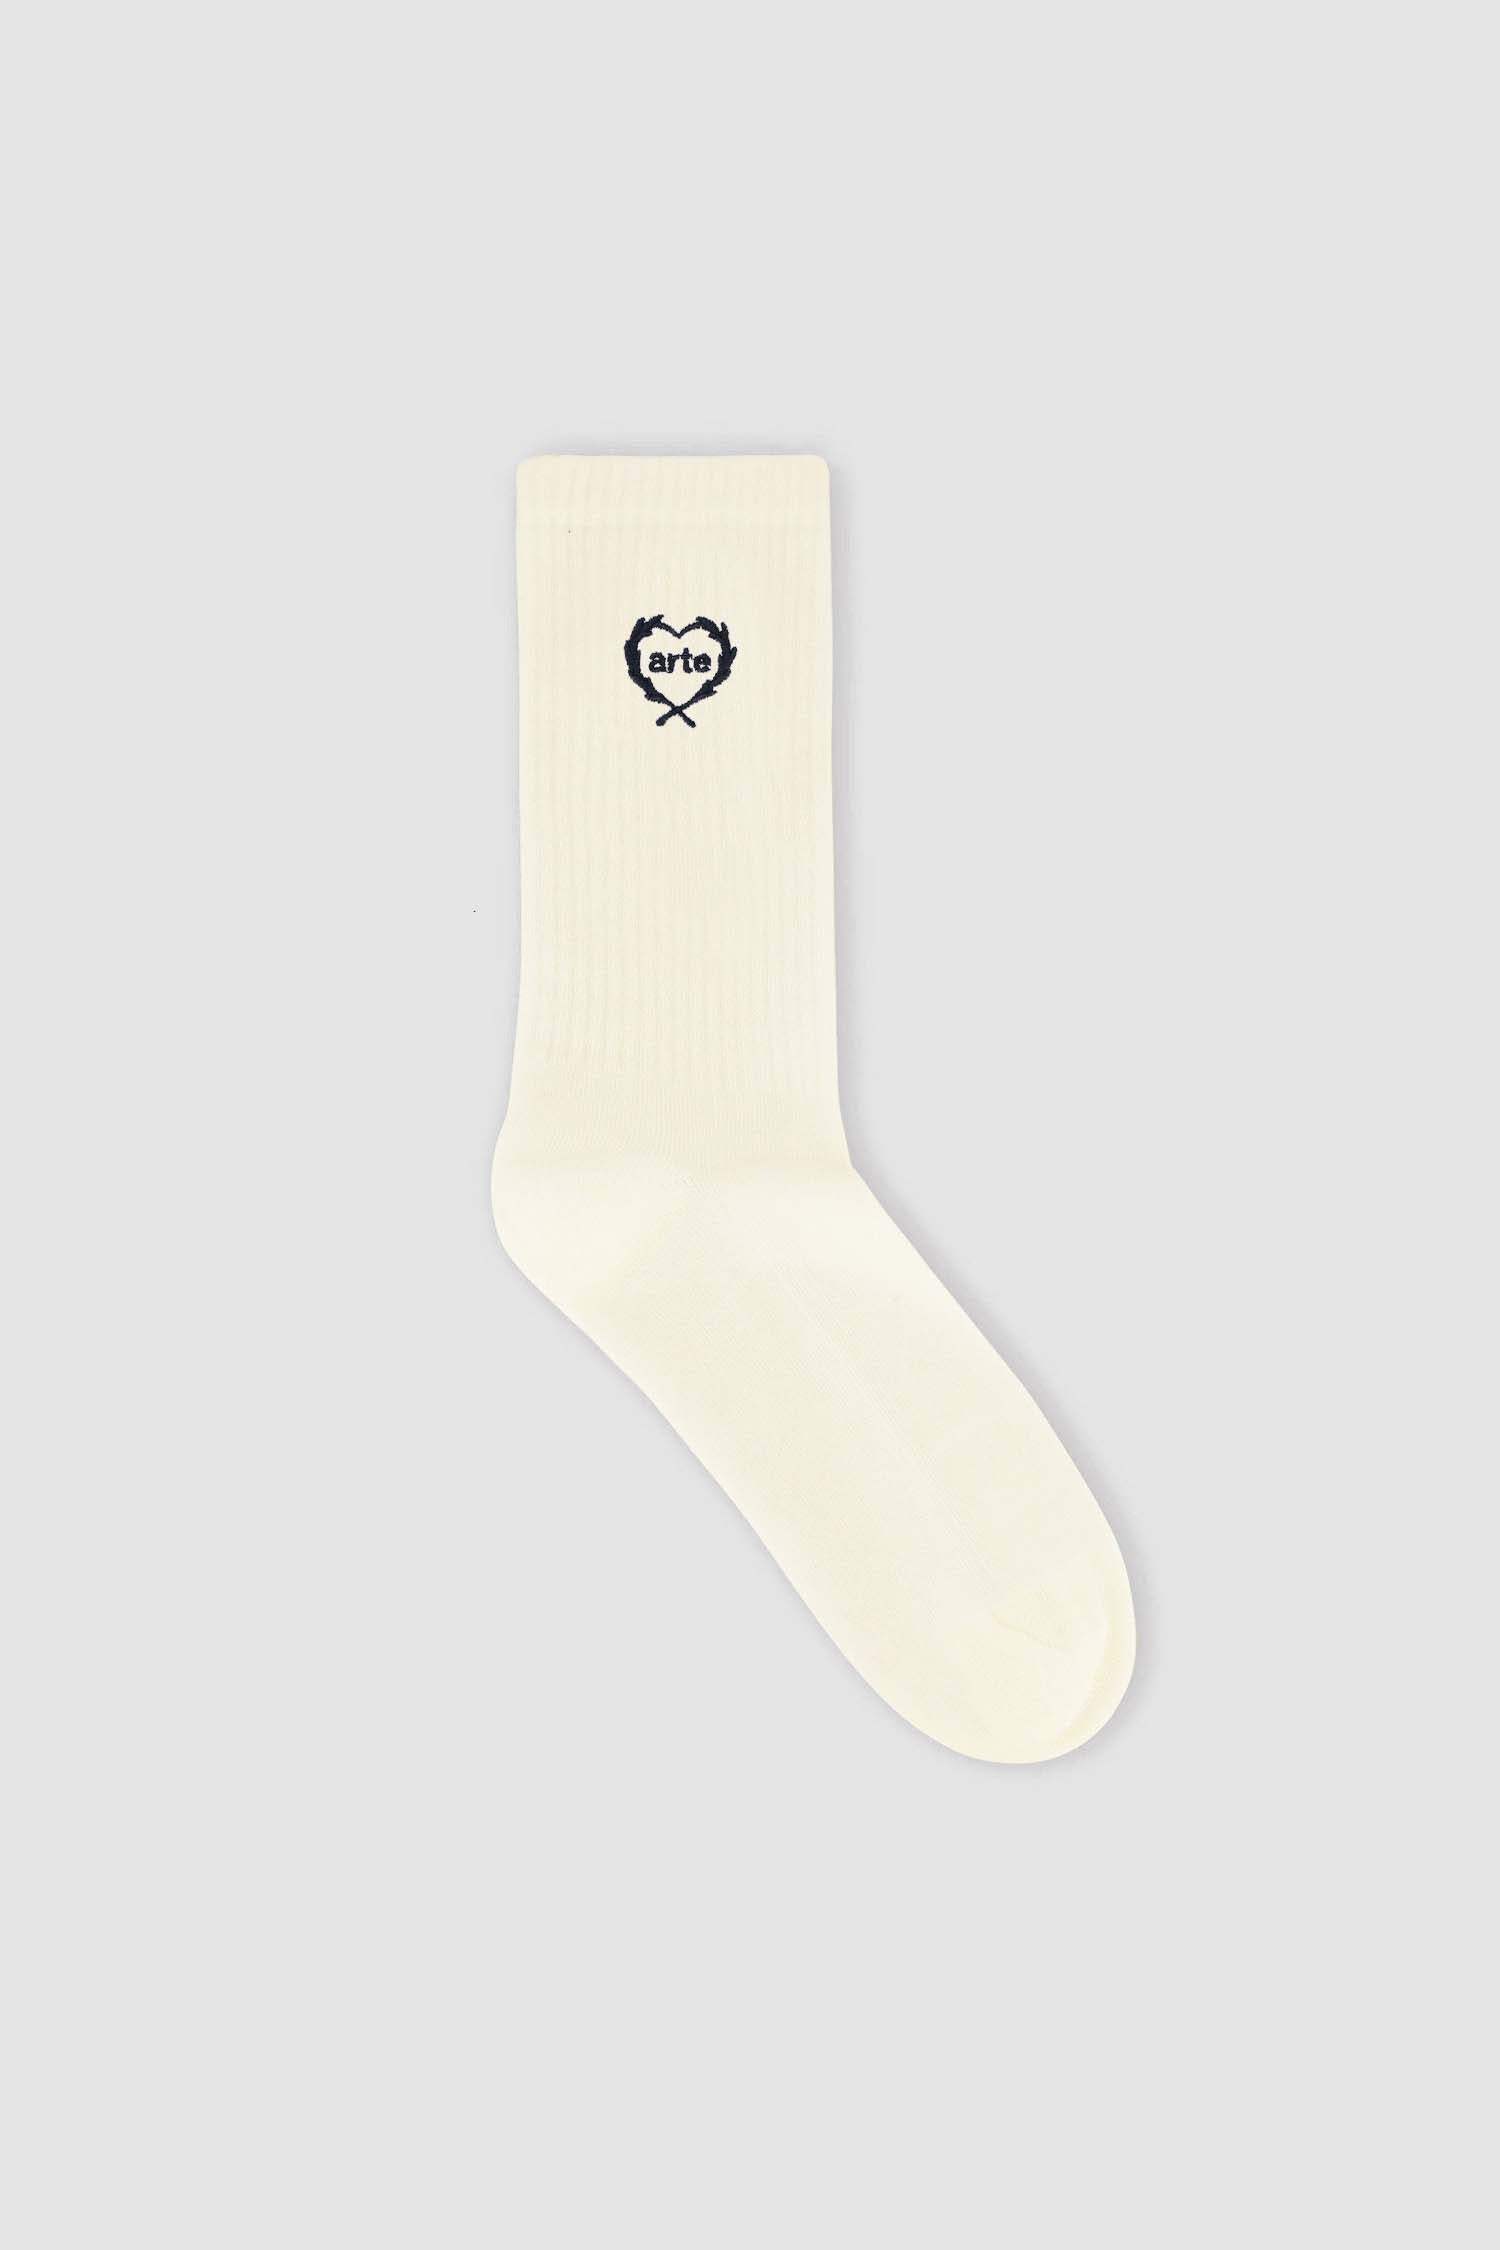 Arte Small Heart Socks - Cream